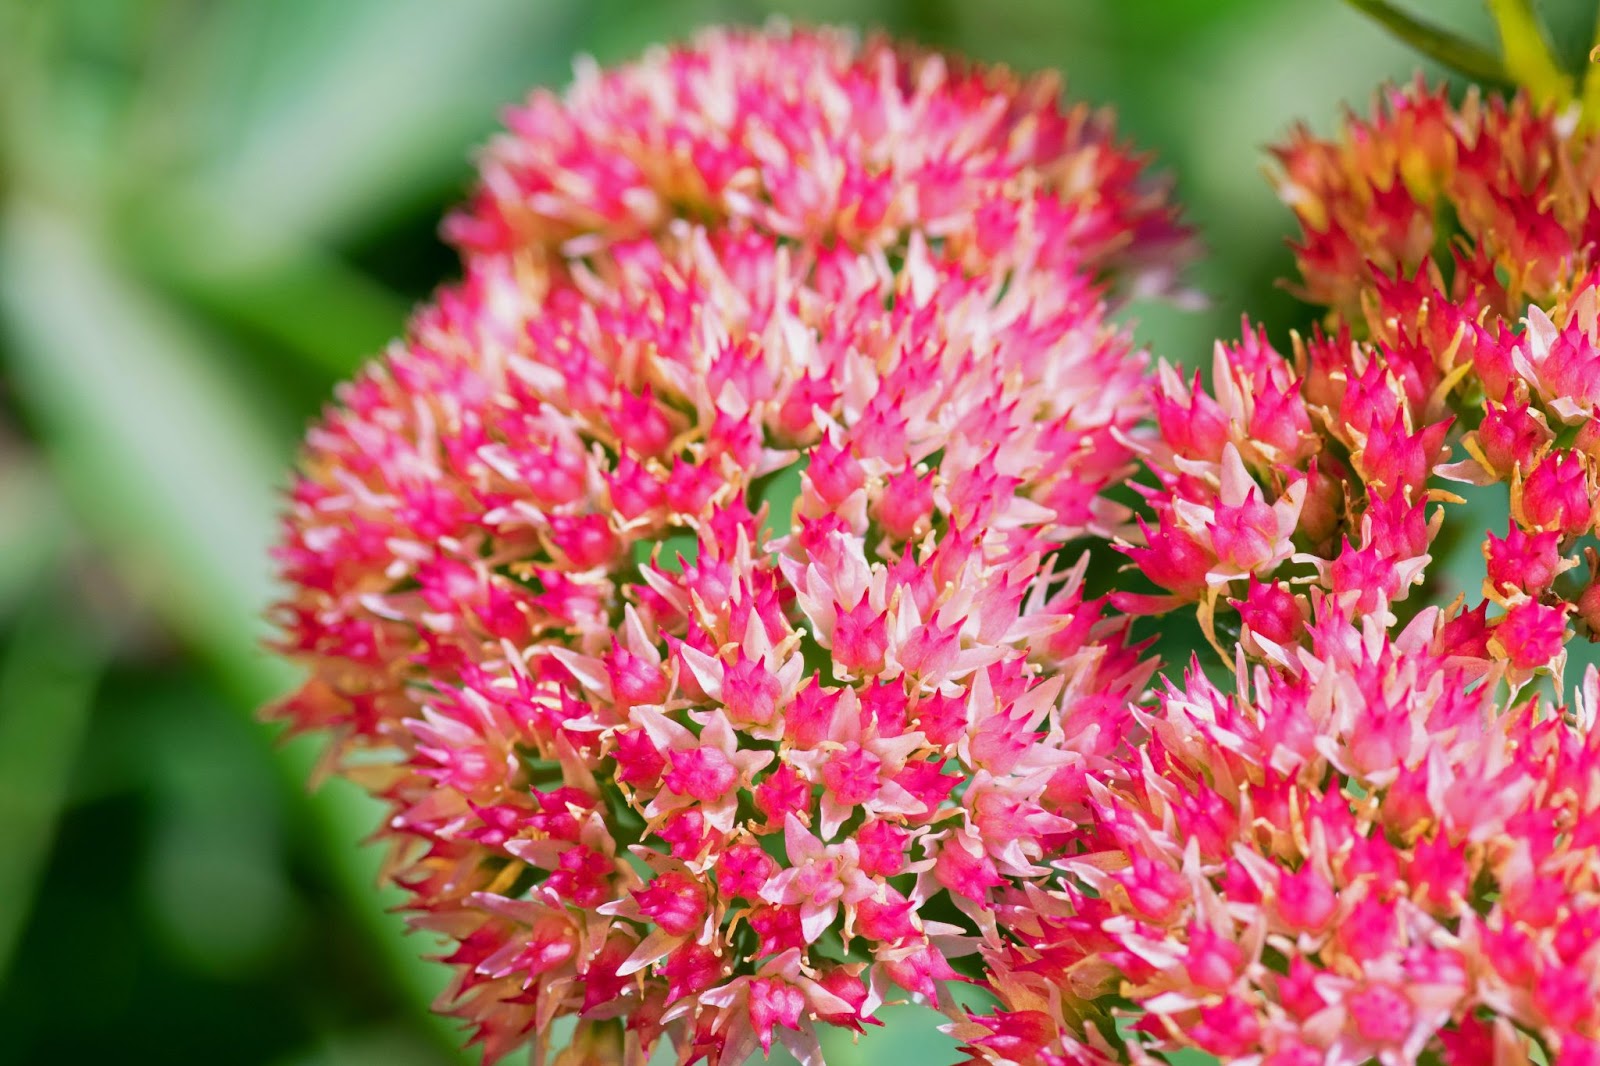 a close up of a flower
